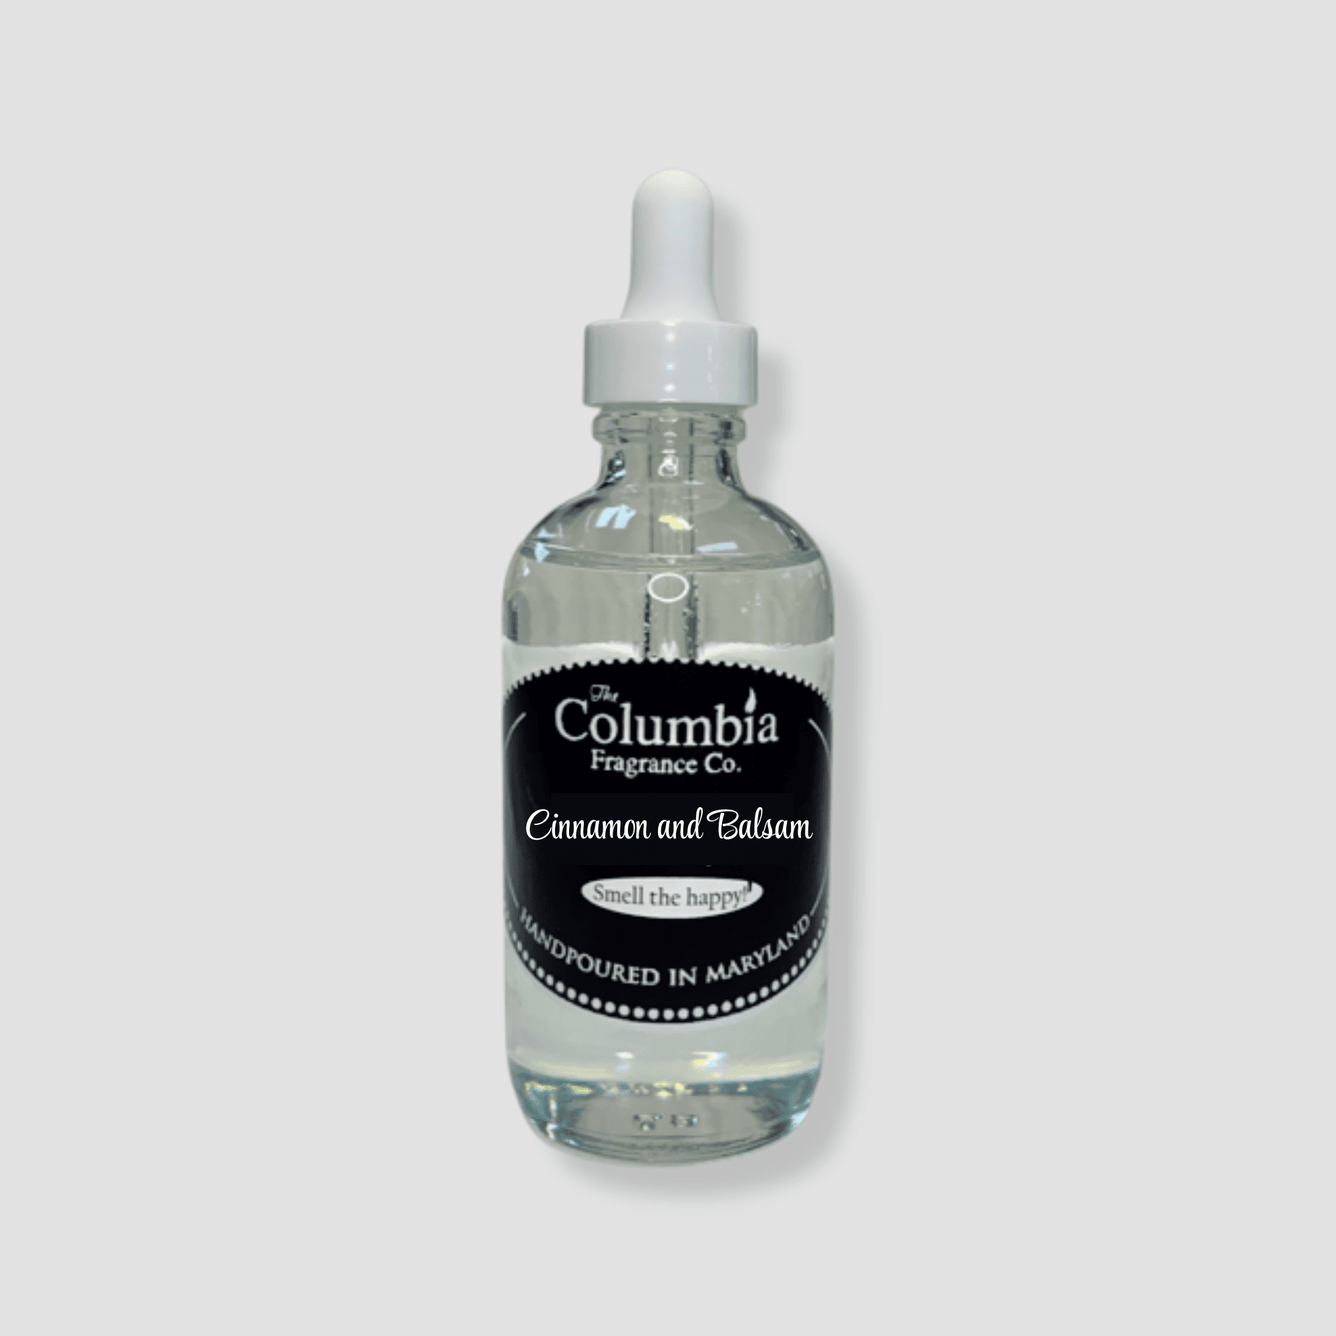 Cinnamon and Balsam | The Columbia Fragrance Co.